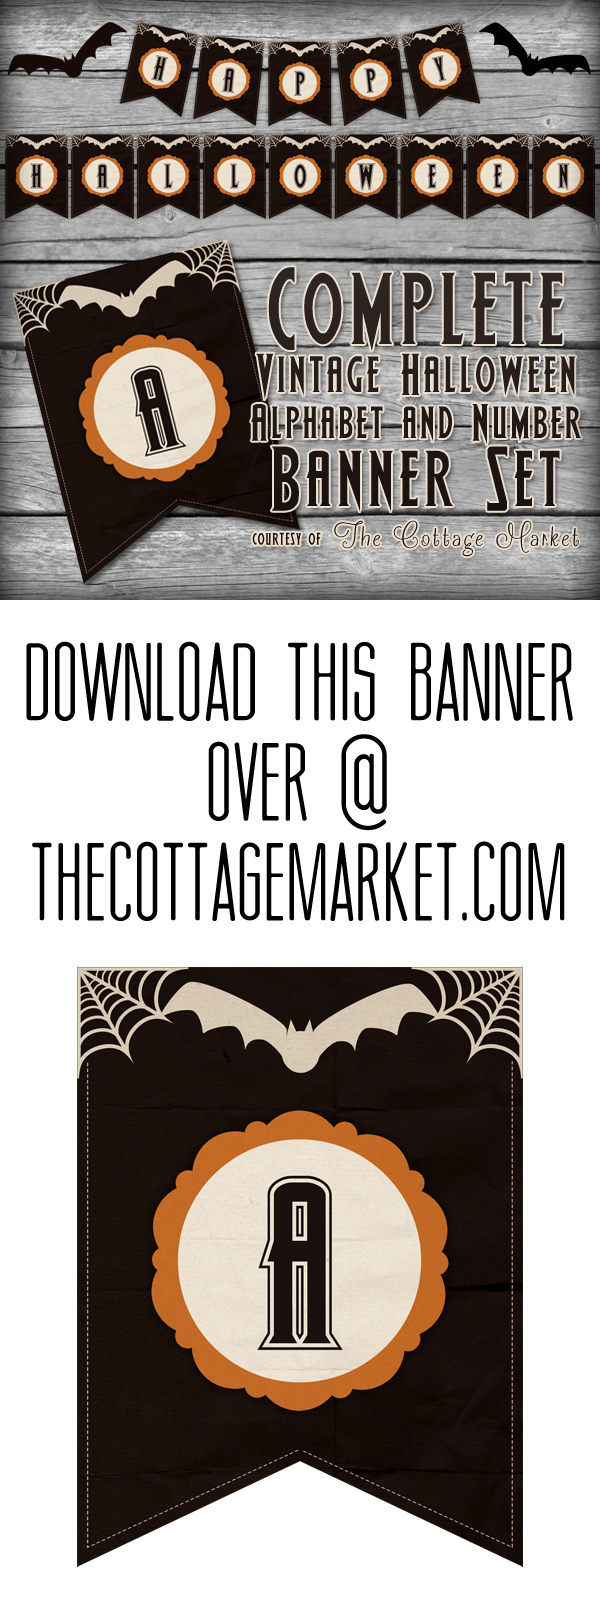 Free Printable Halloween Banner Set | The Cottage Market - Free Printable Halloween Banner